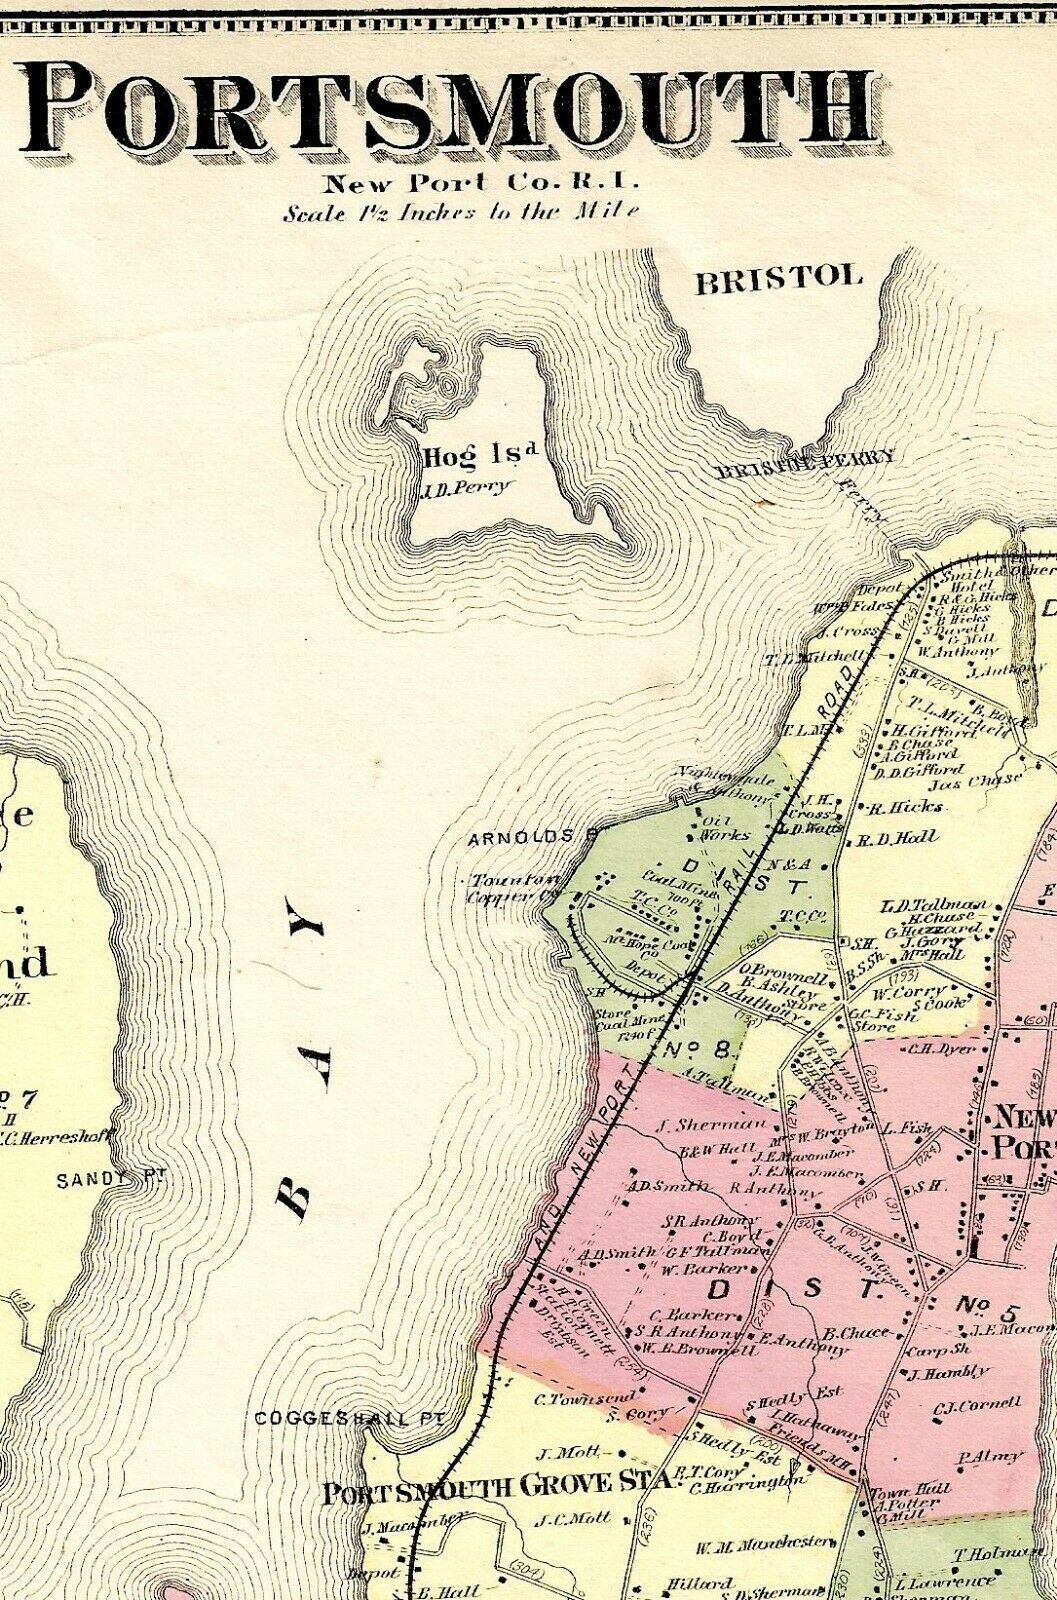 1870 Portsmouth, Ri., Original Hand Colored Map, Not A Reprint.